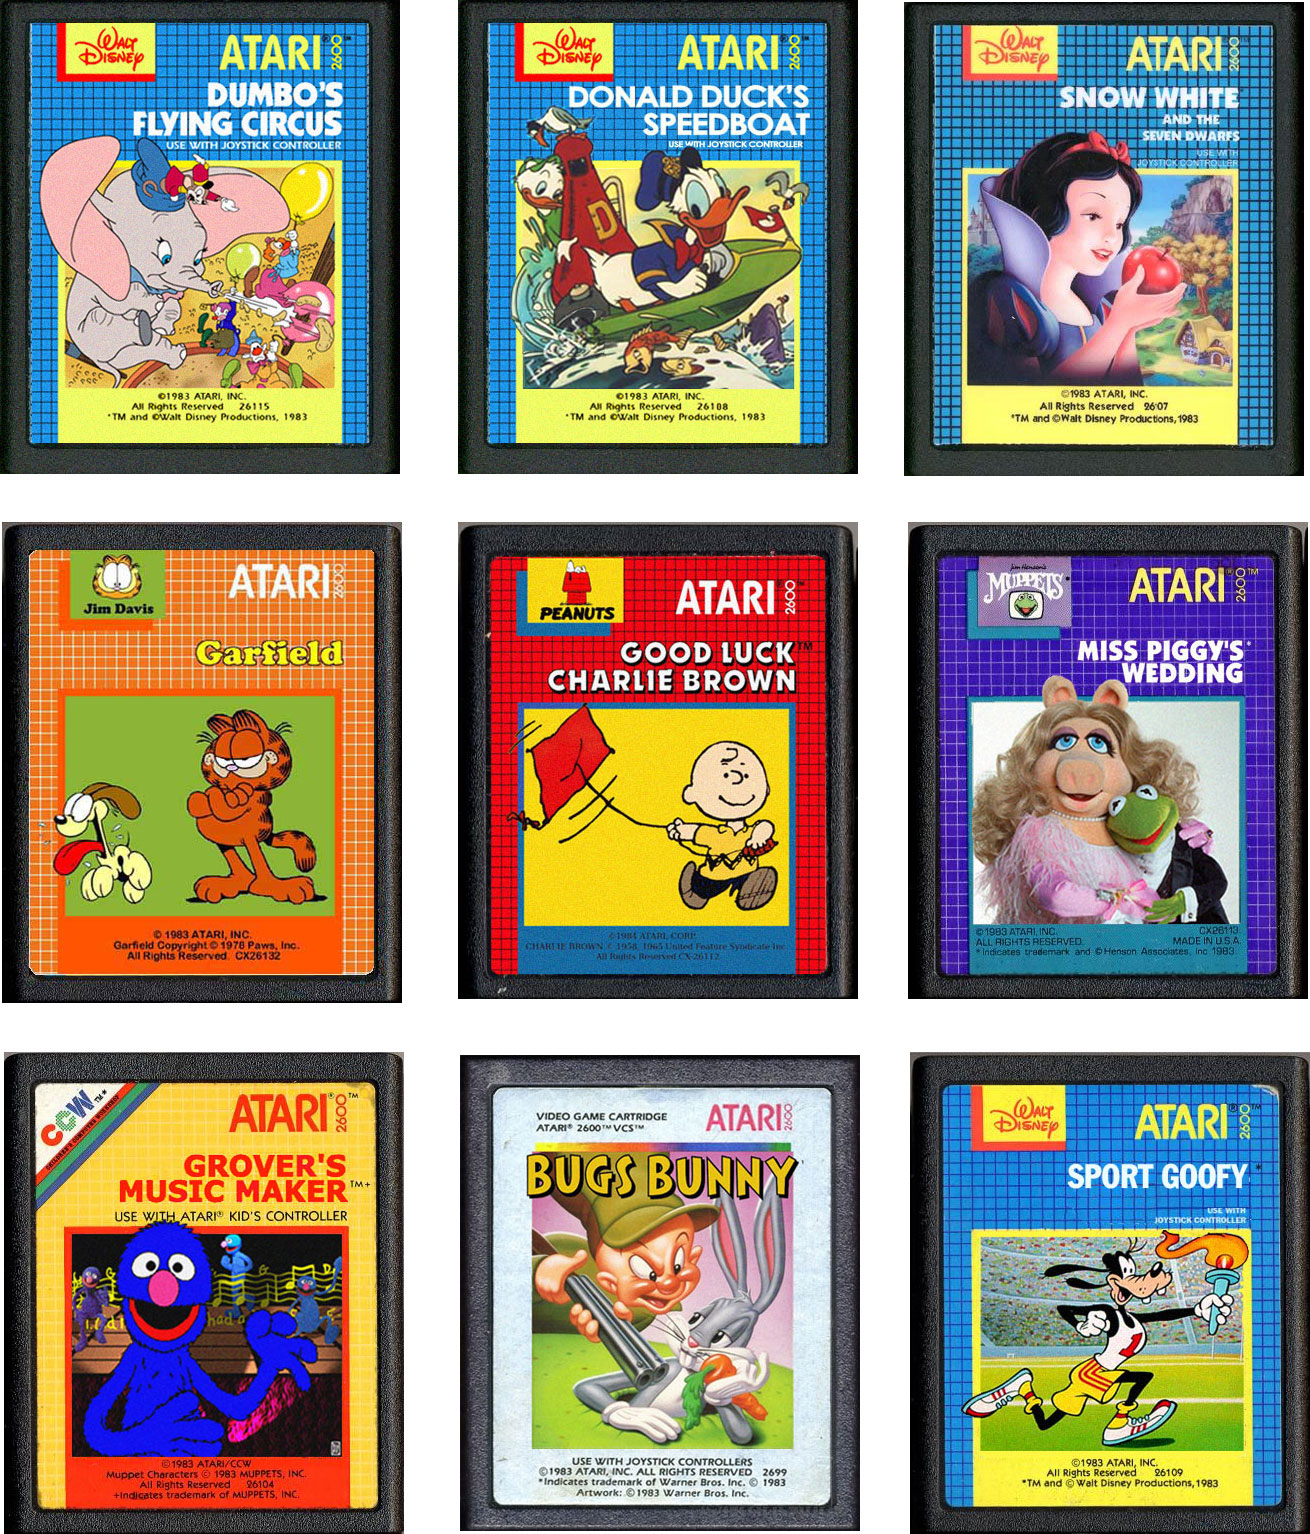 Atari 2600 Nostalgia, Web Sites, and Custom Labels – The Paunch Stevenson Show1310 x 1534